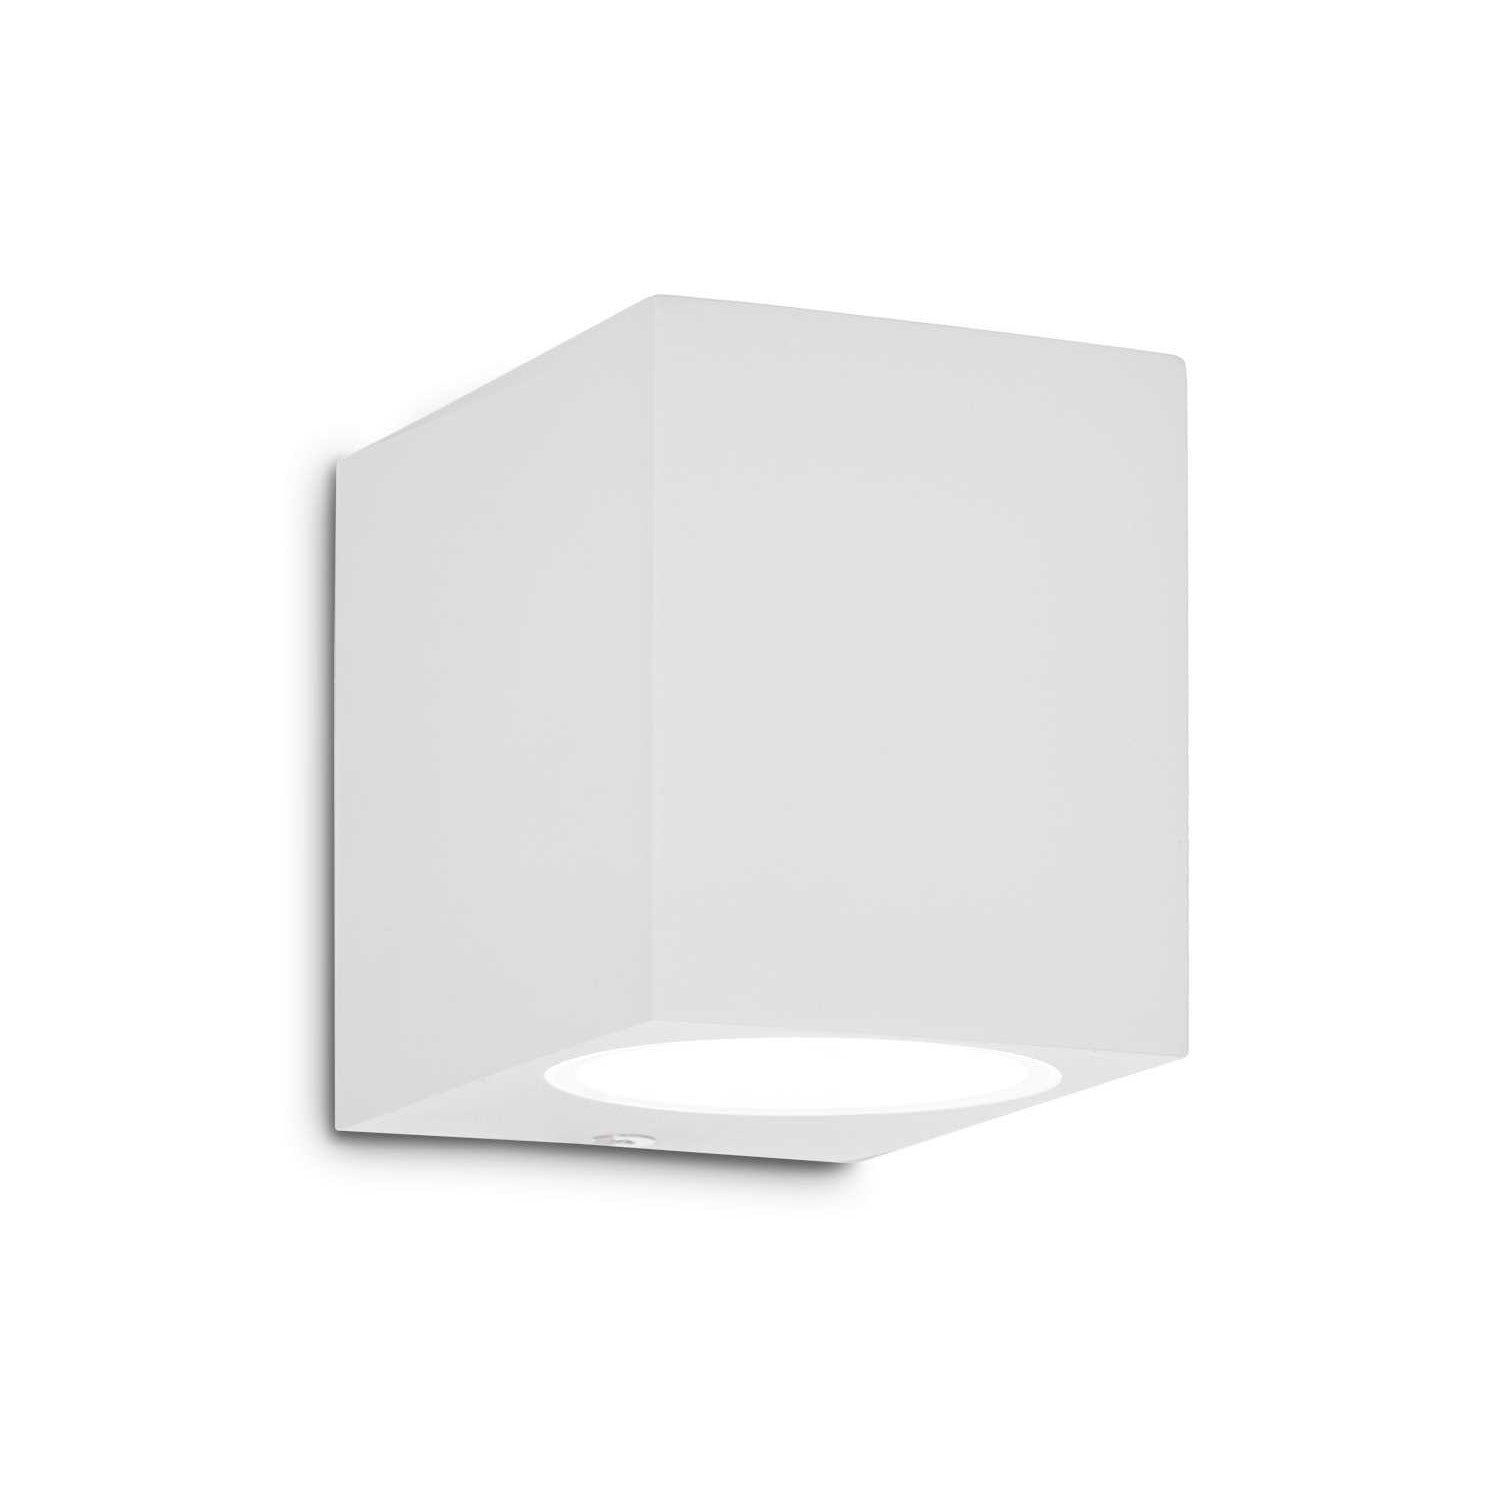 UP - Cubic outdoor designer wall light